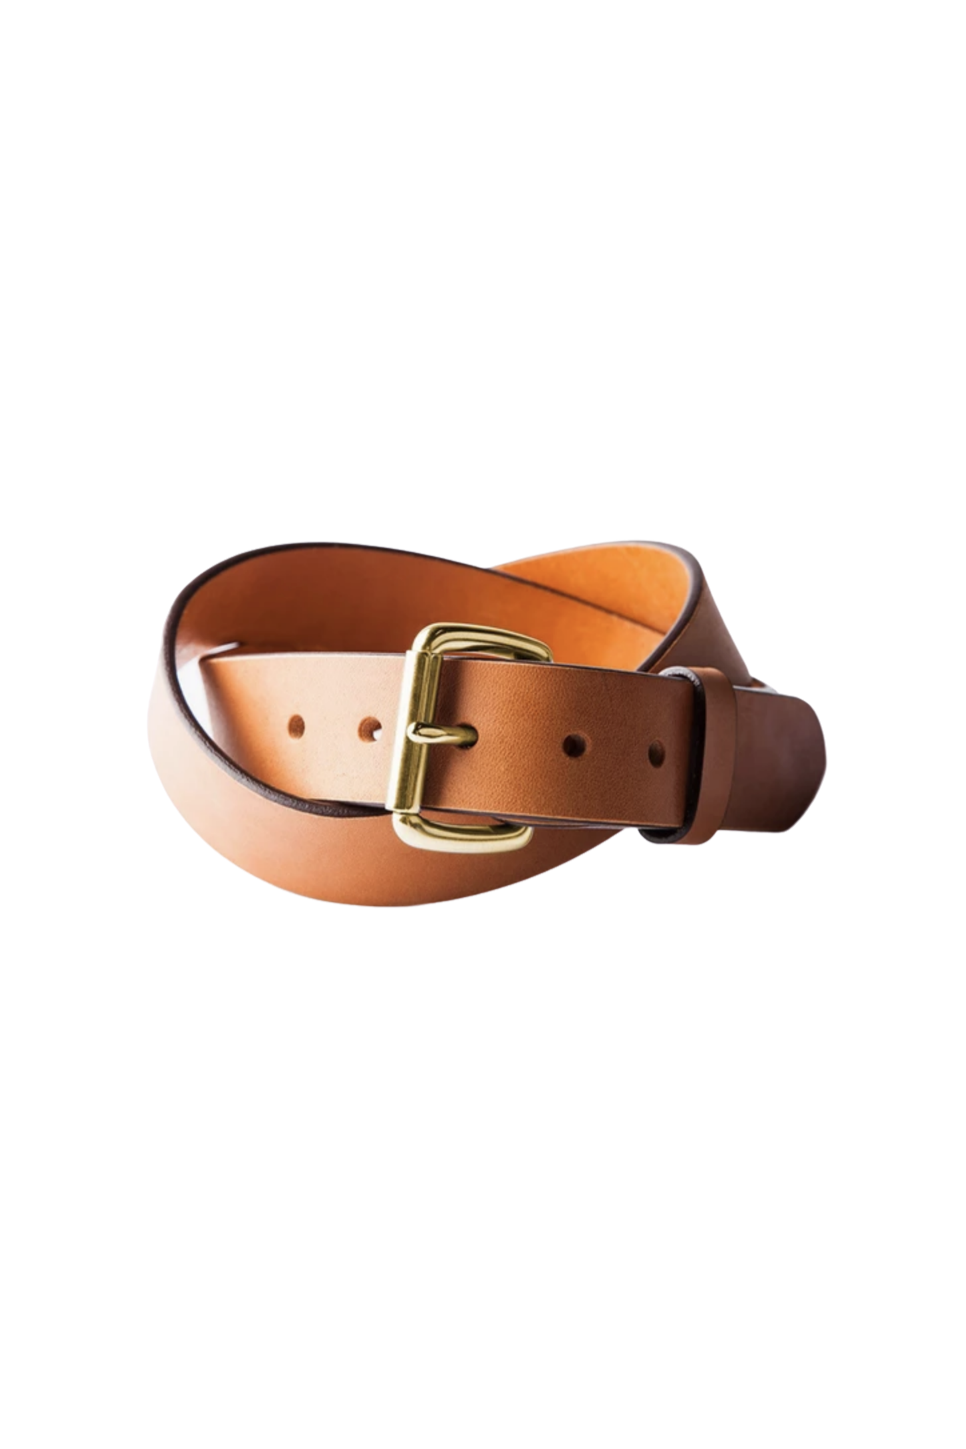 Tanner Goods - Standard Belt - Saddle Tan/Brass